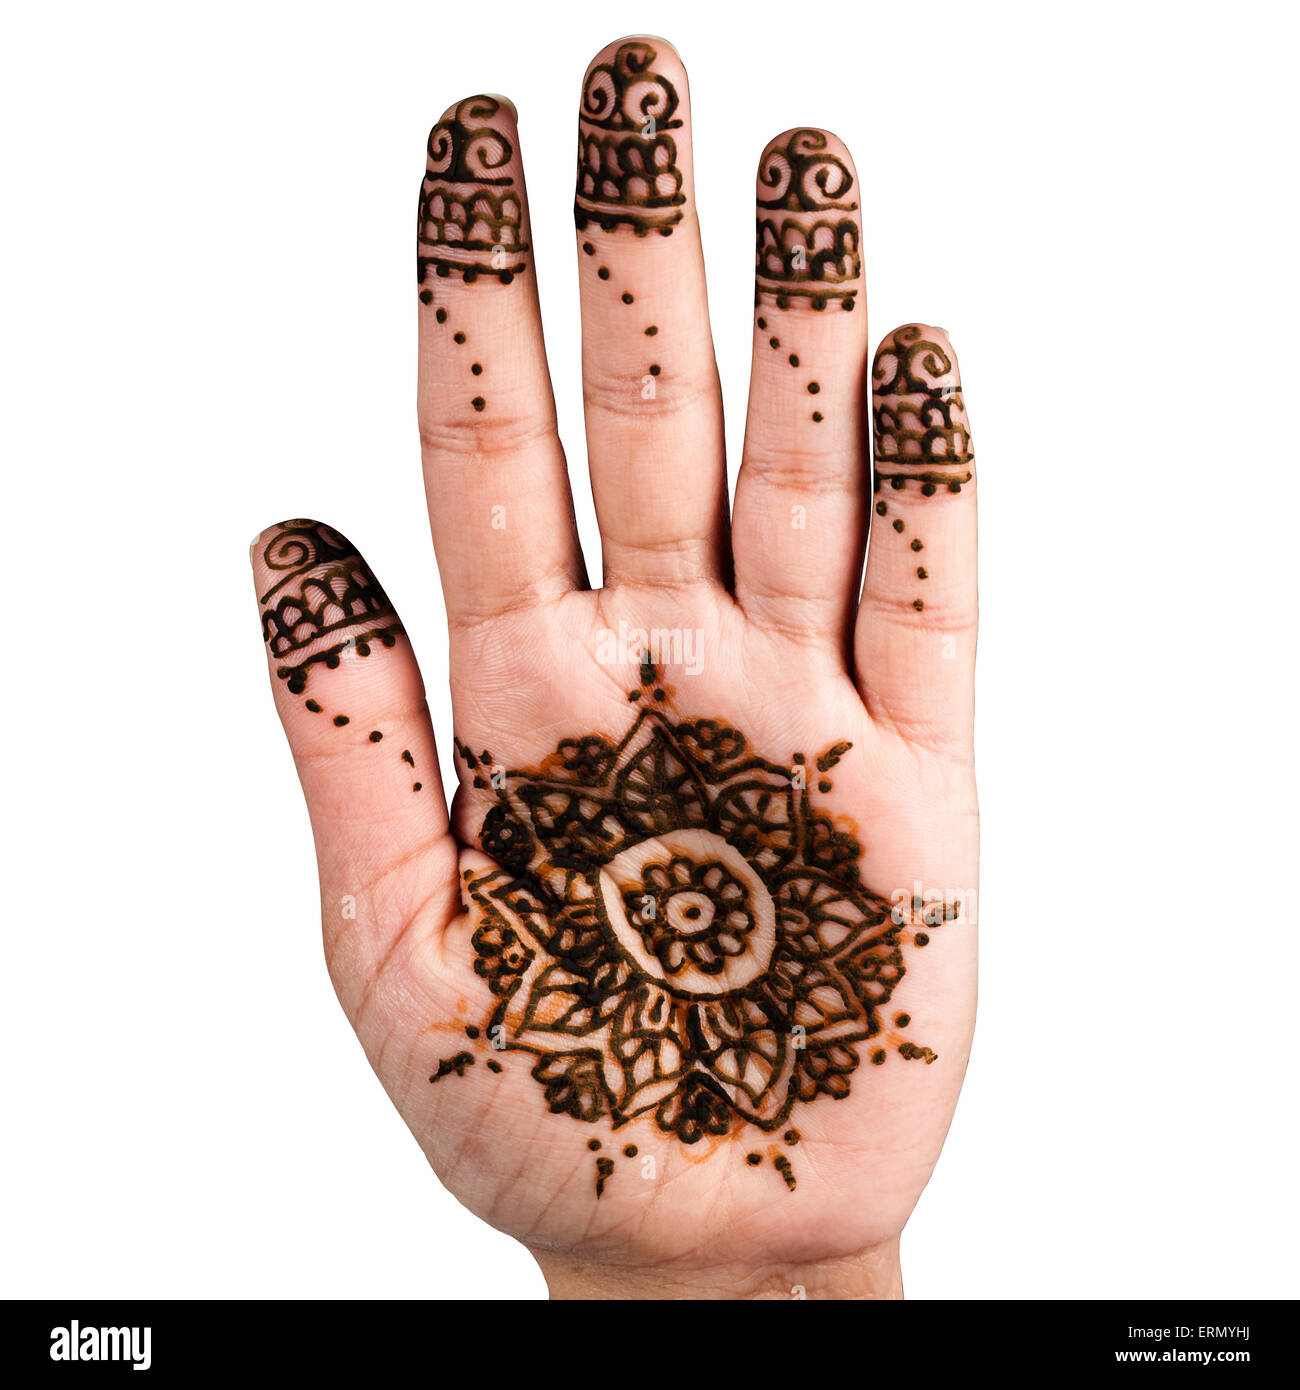 Henna hand tattoo decoration art clipping path square white background Stock Photo